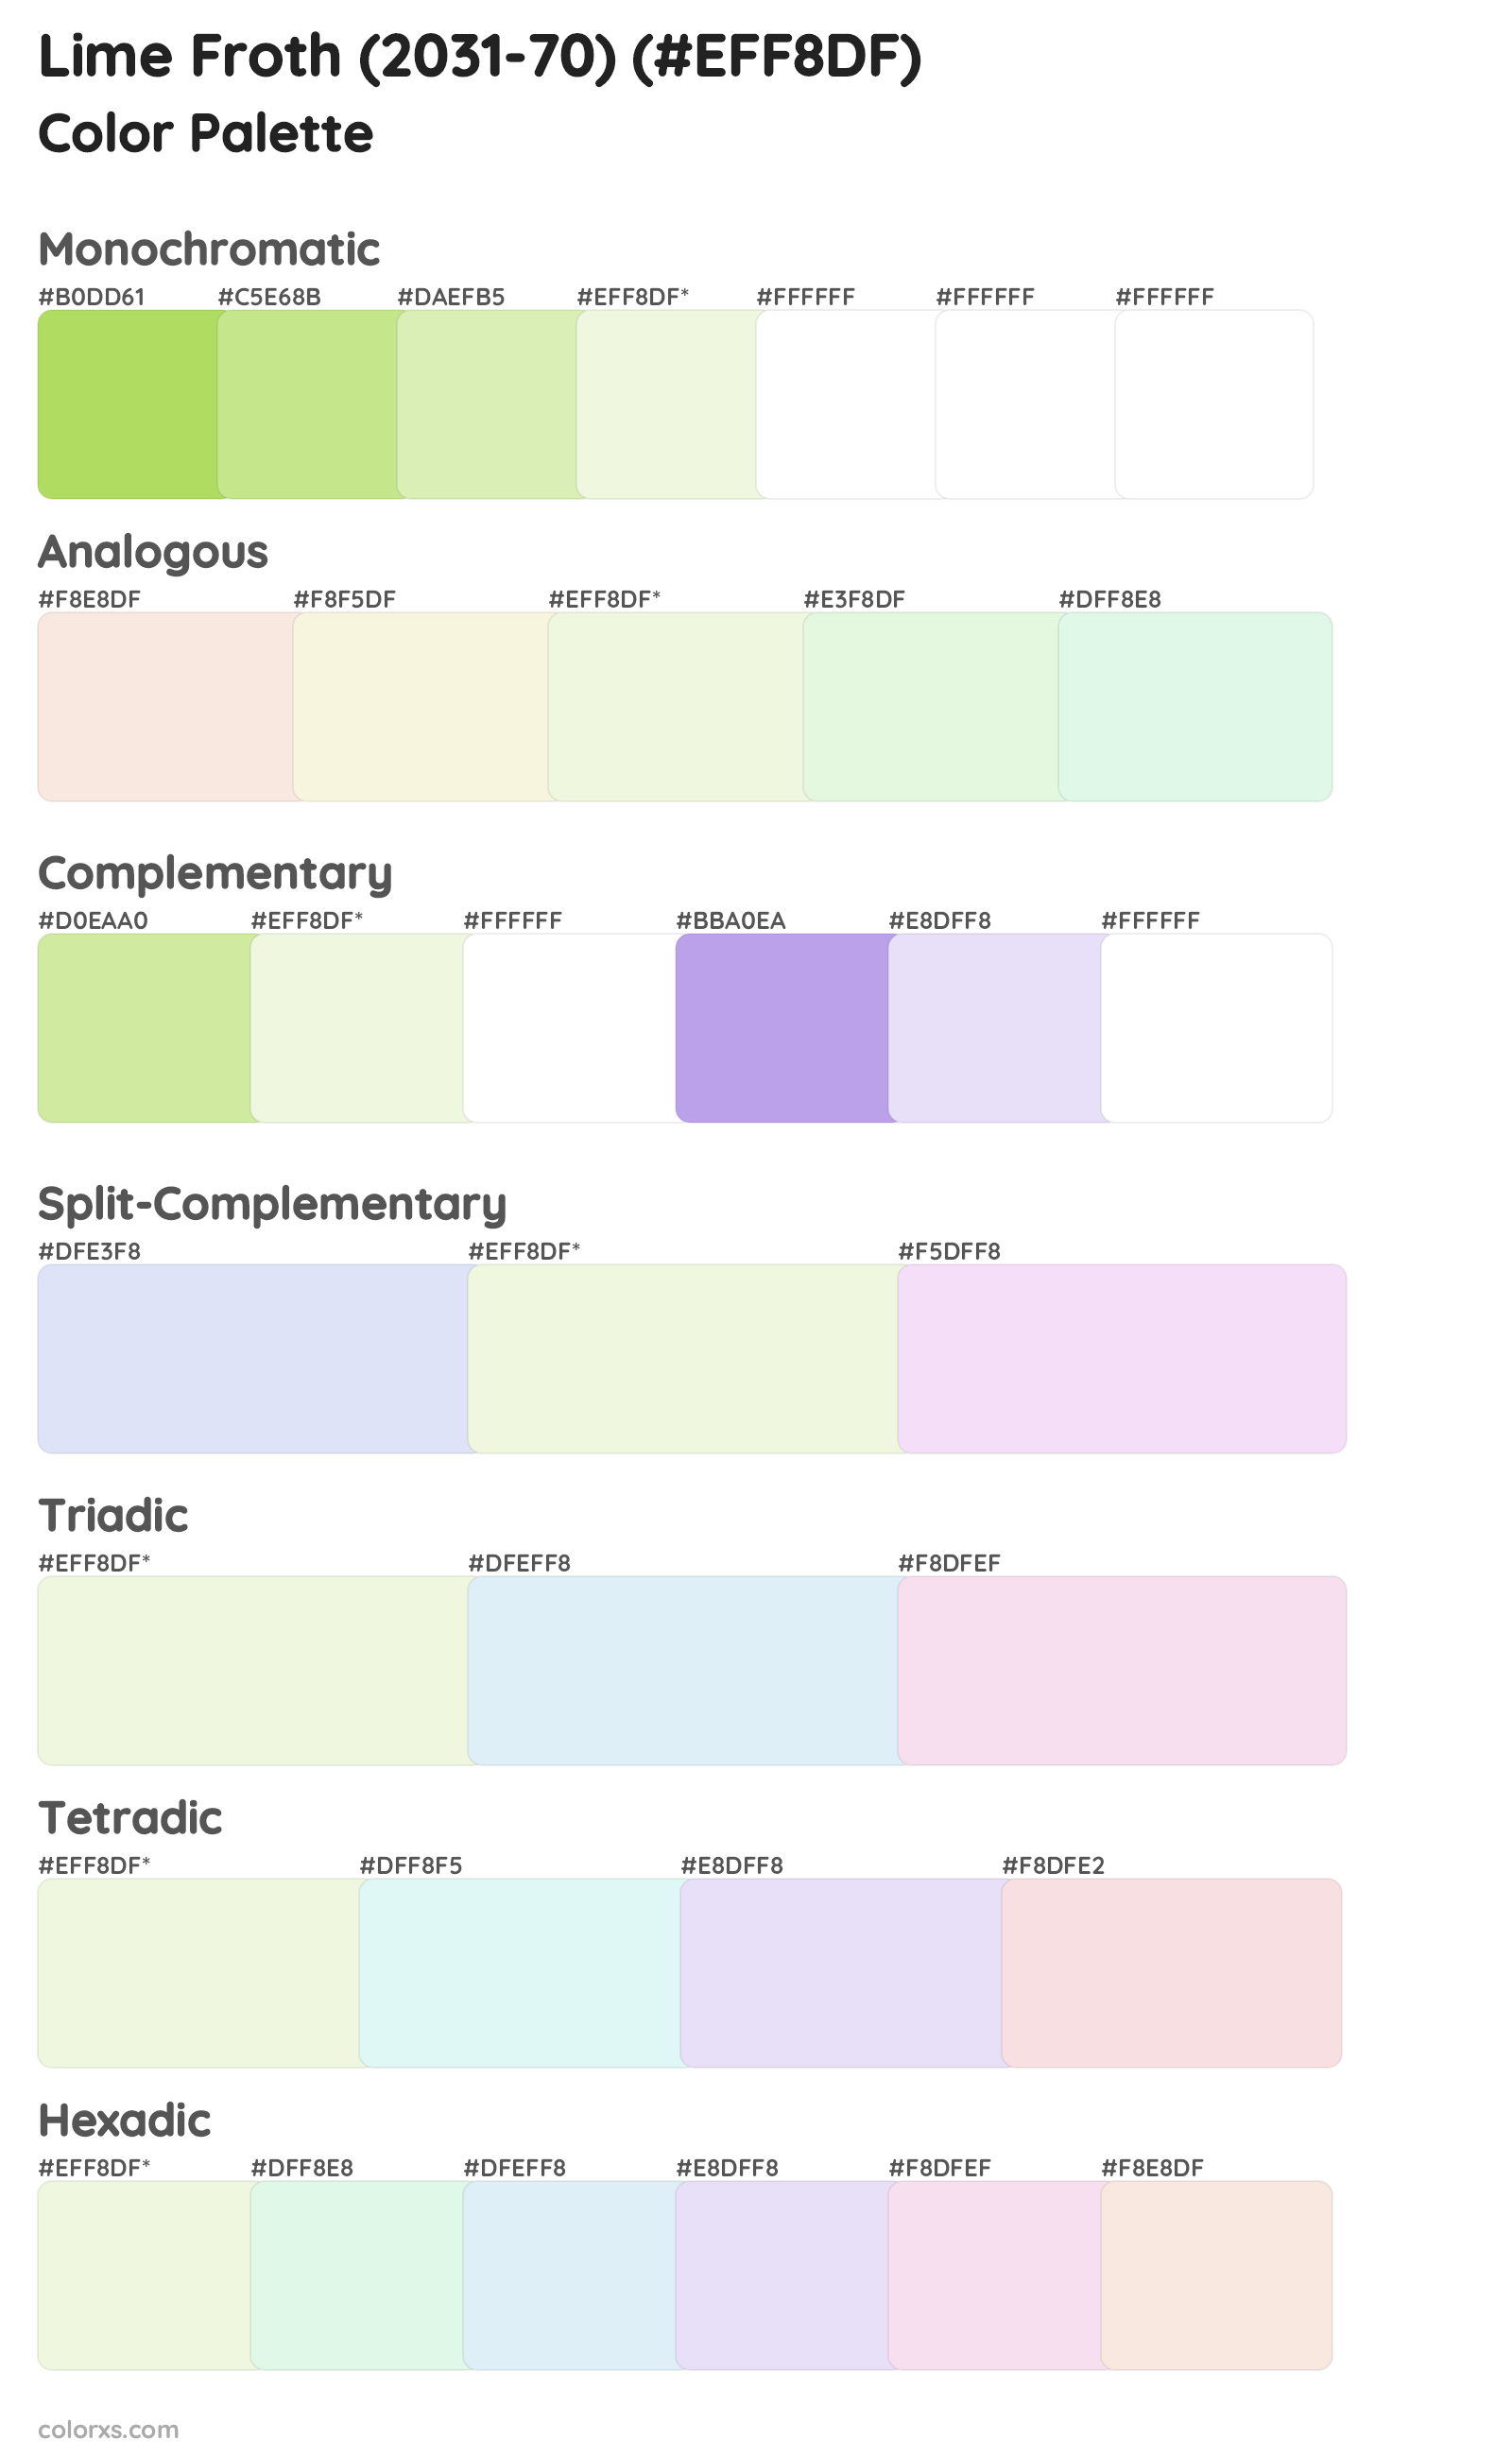 Lime Froth (2031-70) Color Scheme Palettes